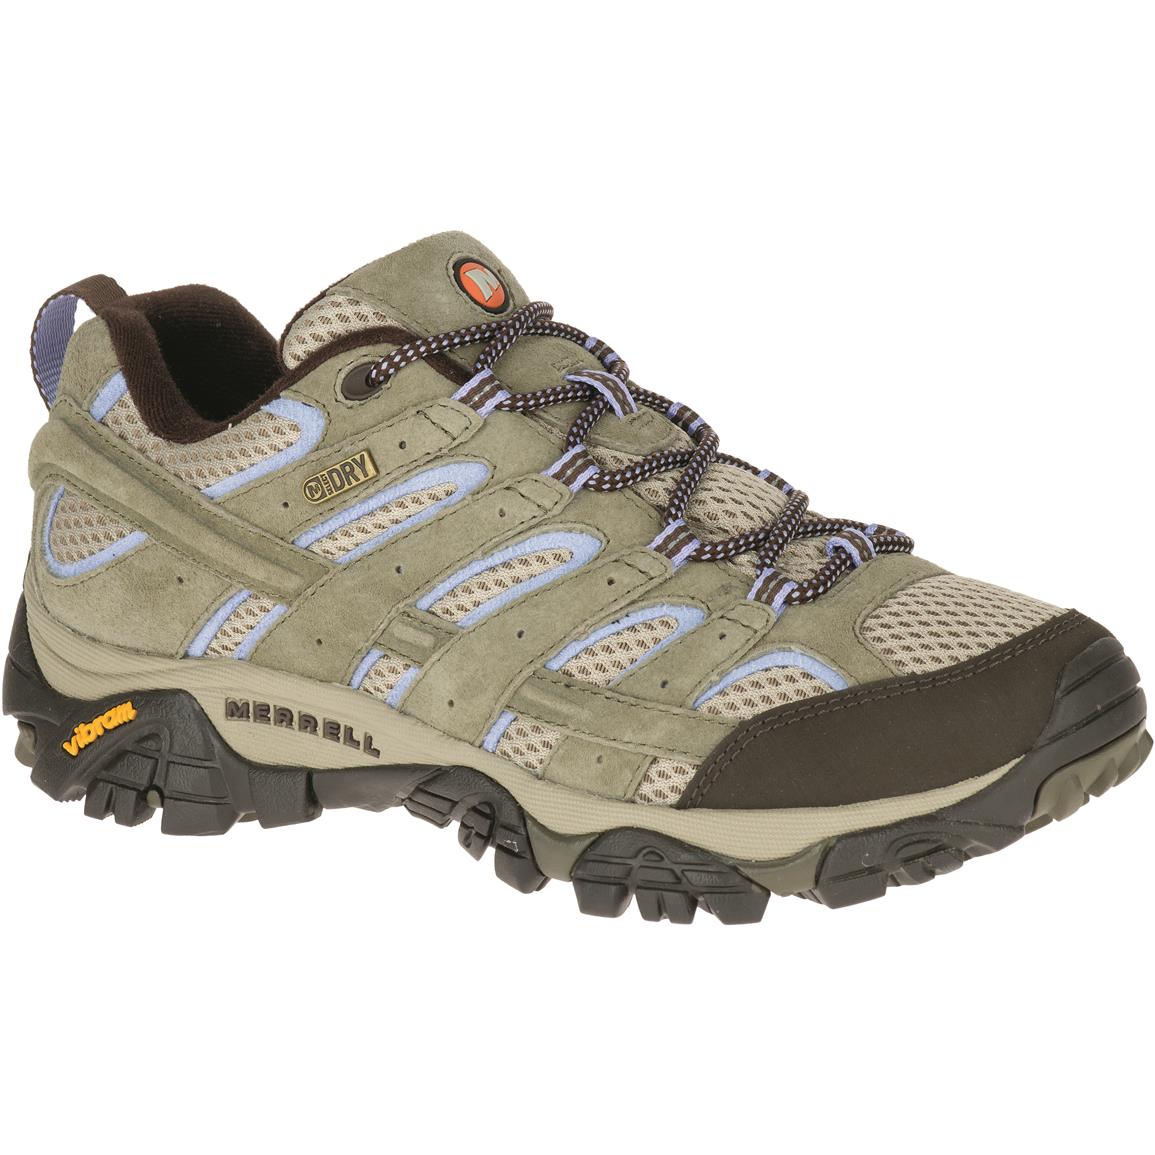 Merrell Women's Moab 2 Waterproof Hiking Shoes - 690256, Hiking Boots ...